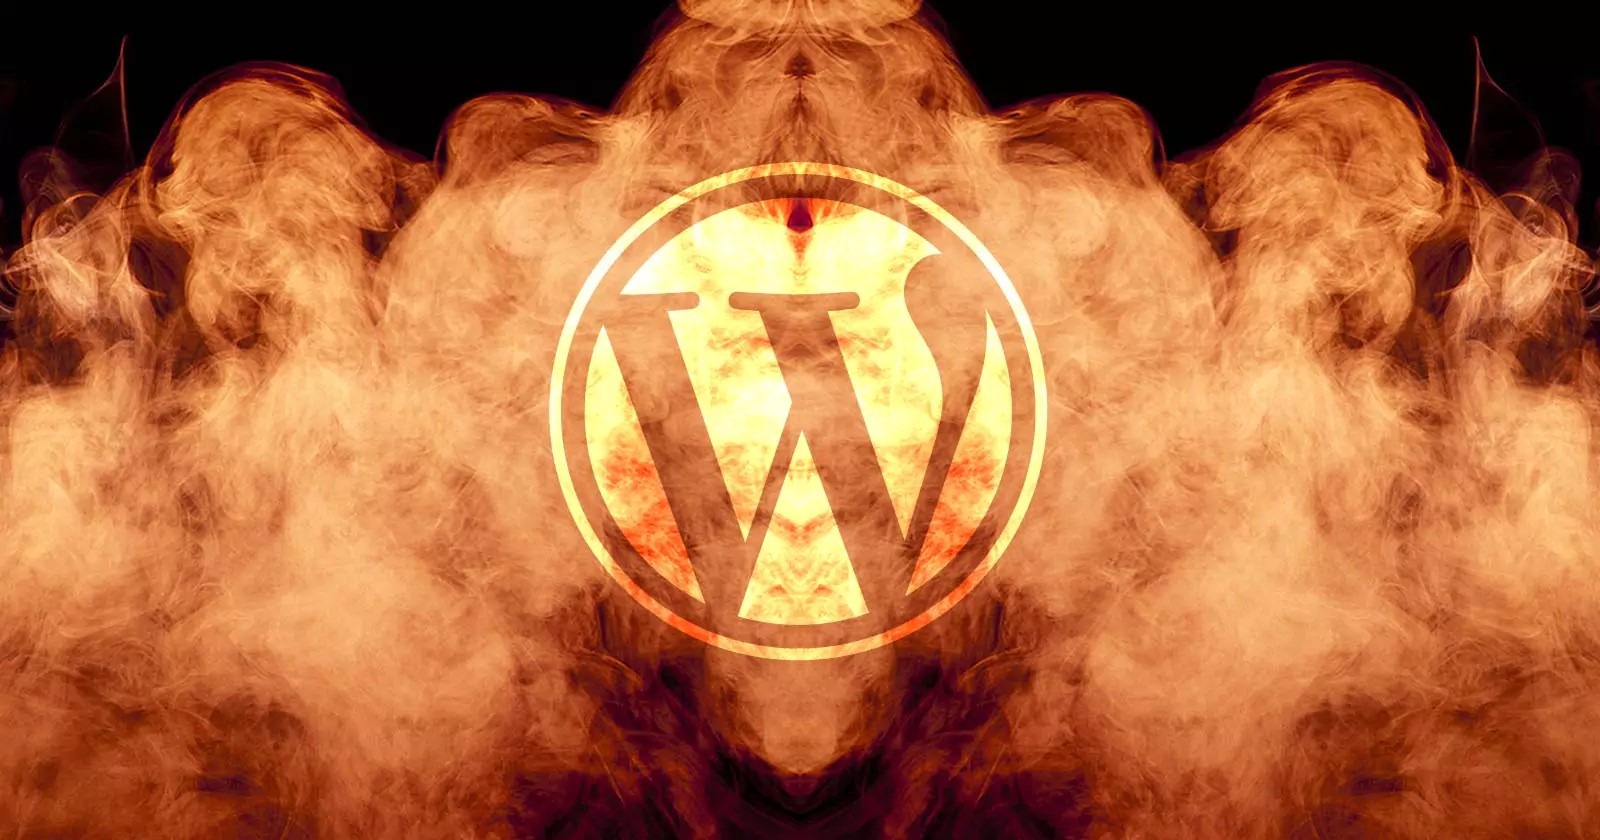 alt=A burning WordPress logo against a black background.